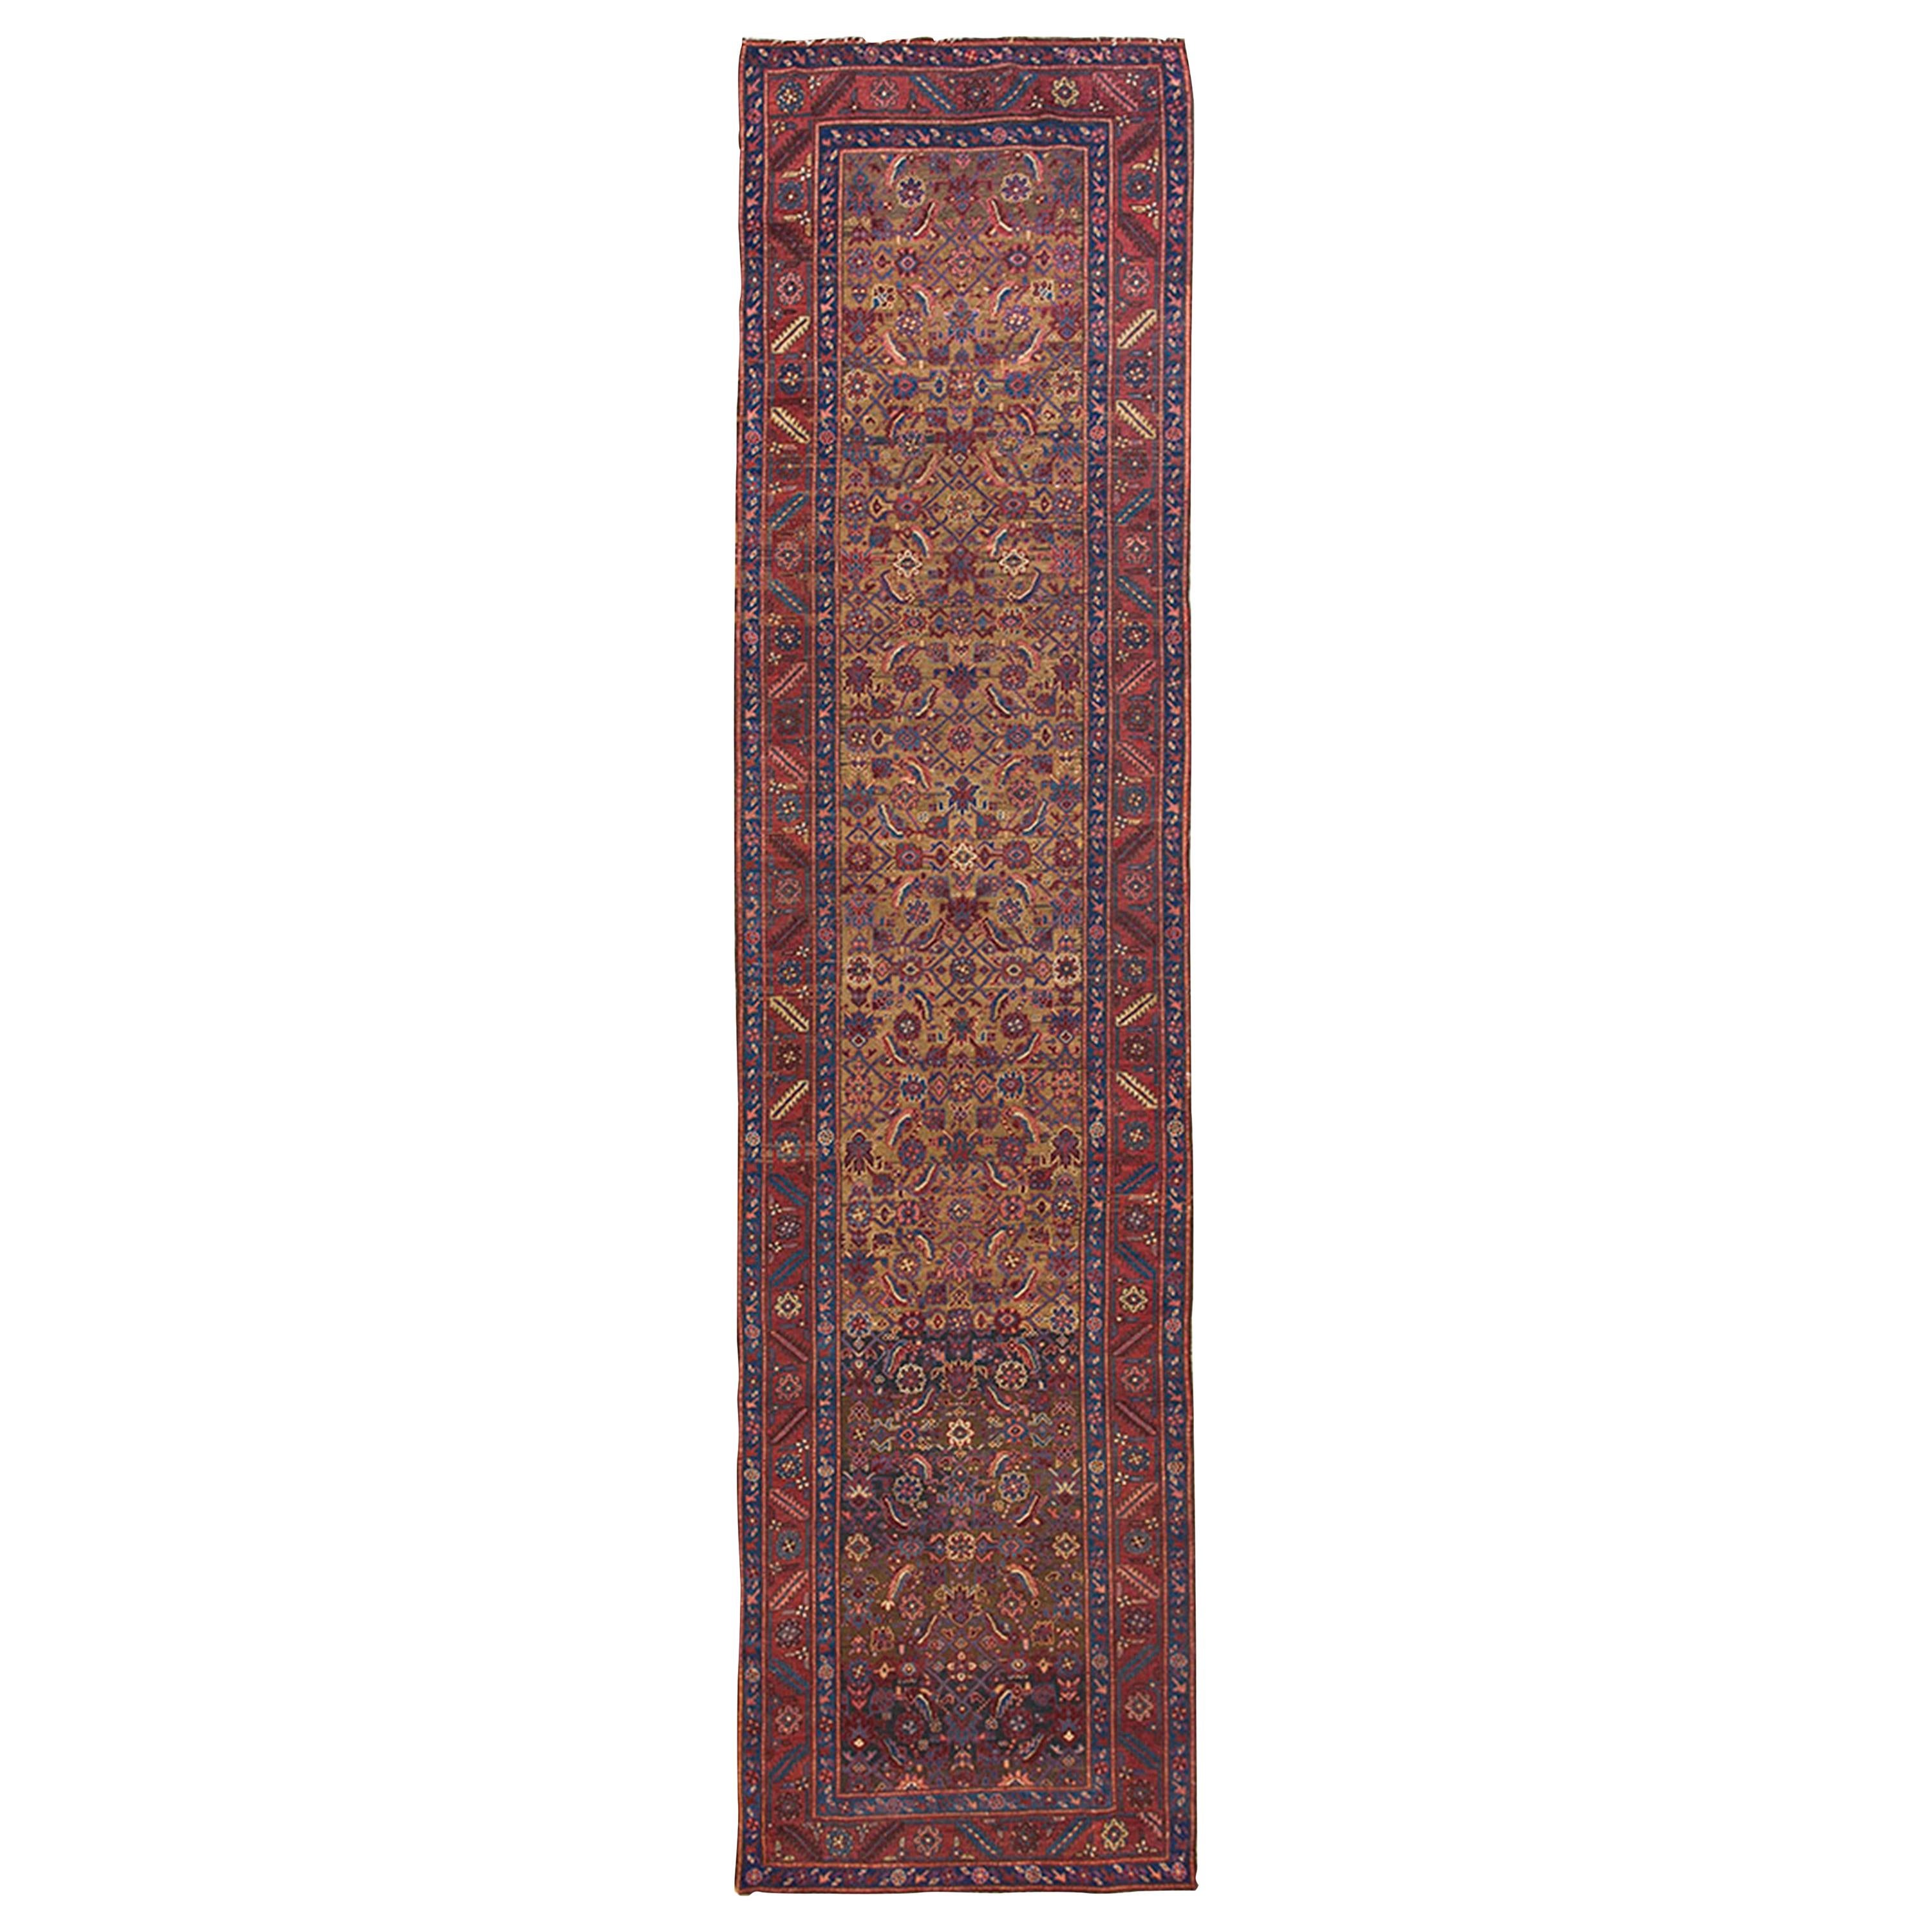 19th Century N.W. Persian Bakshaiesh Runner Carpet ( 3'6" x 14'2" - 107 x 432 ) For Sale